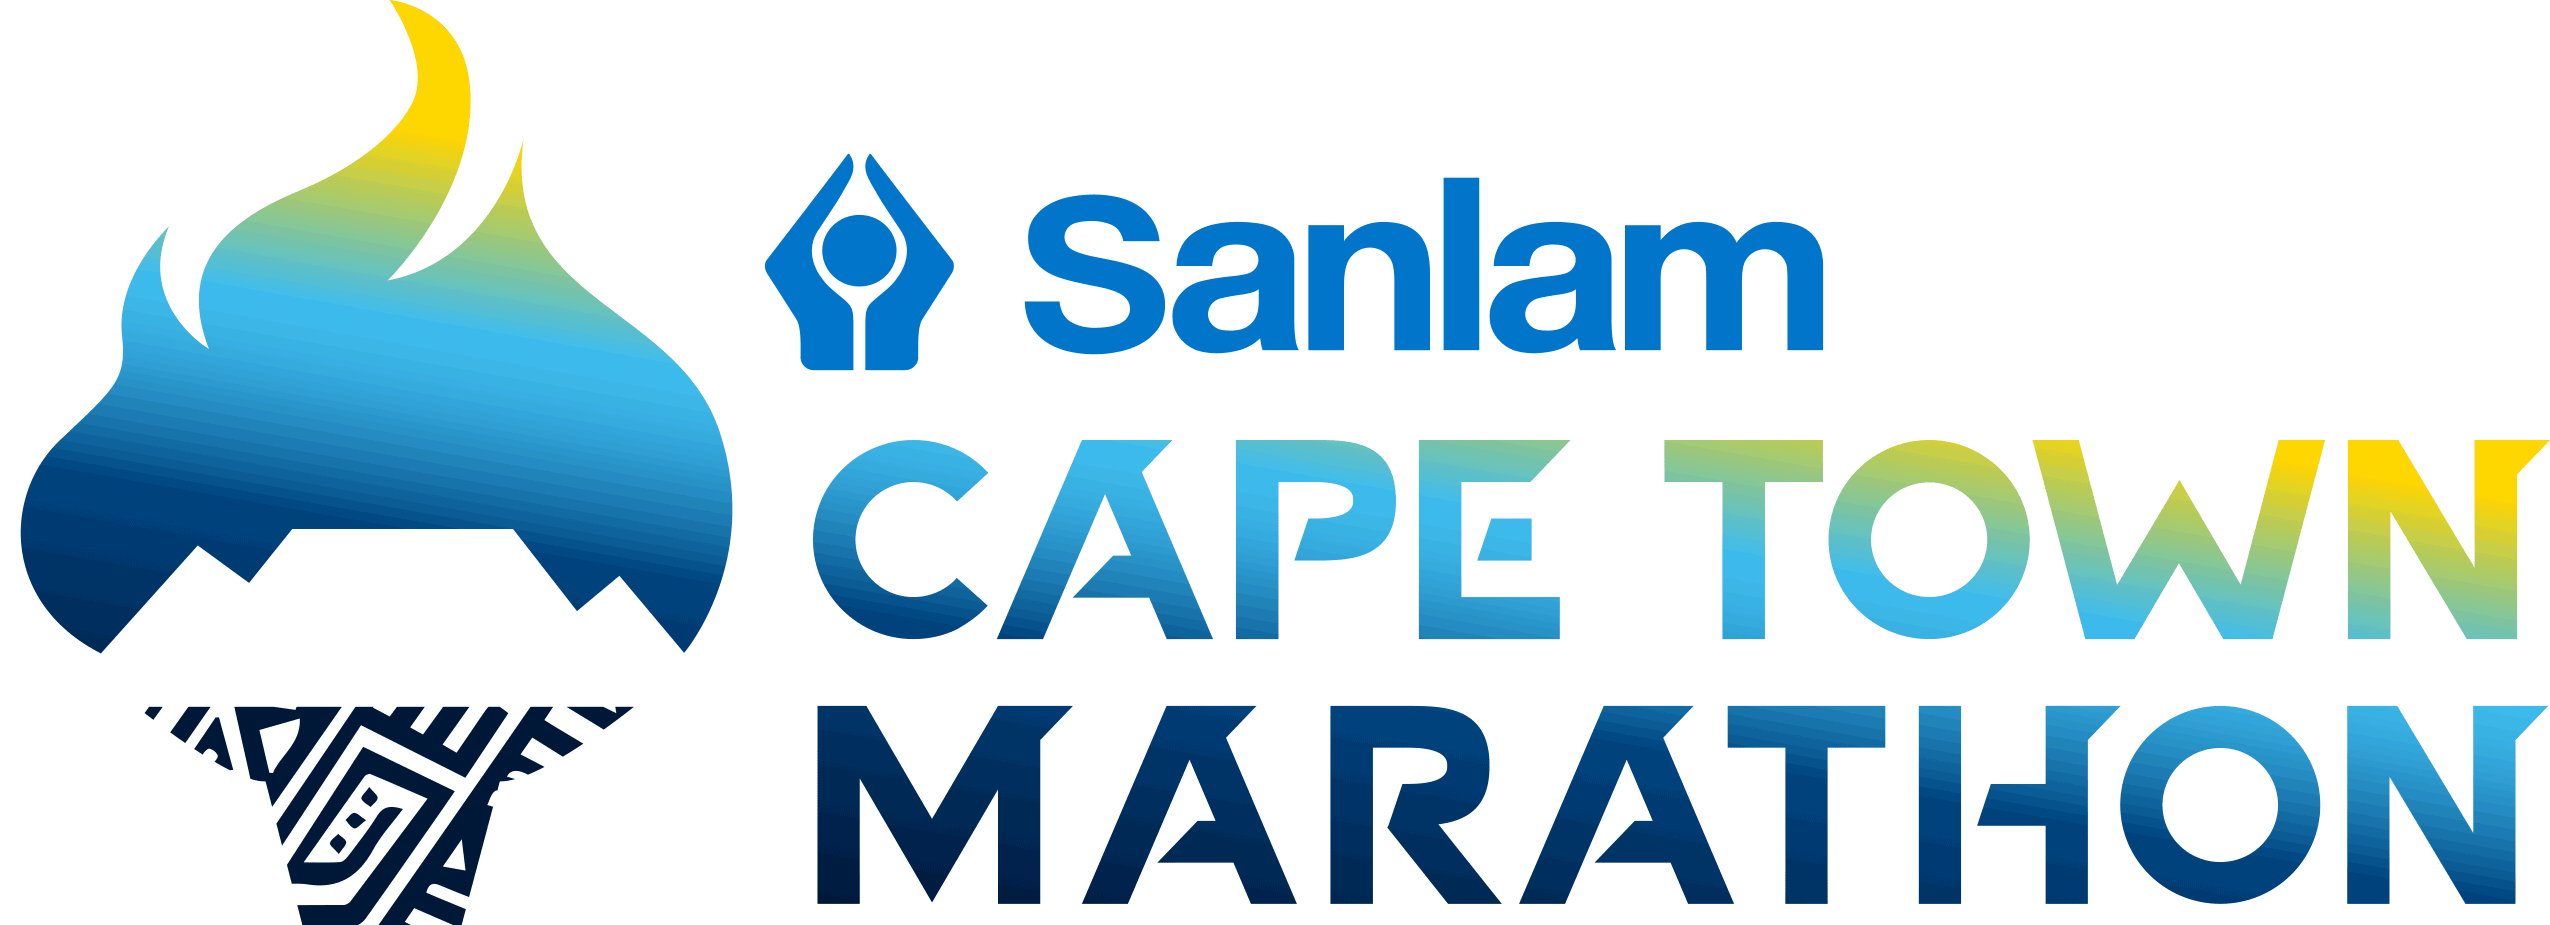 Sanlam Cape Town <br/> Marathon